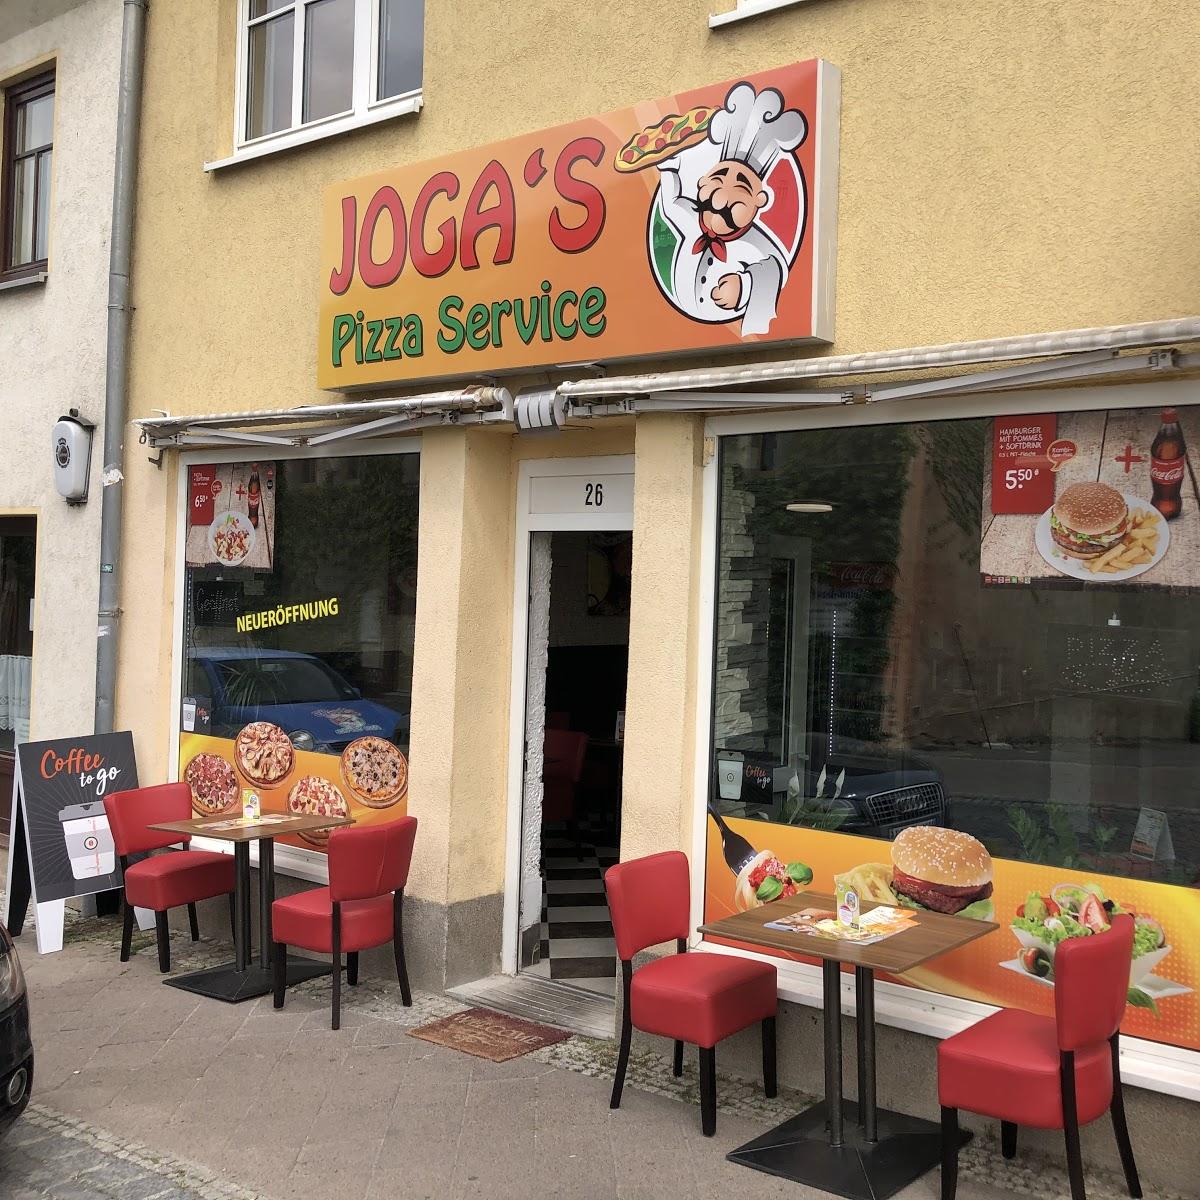 Restaurant "Jogas Pizza Service" in Taucha